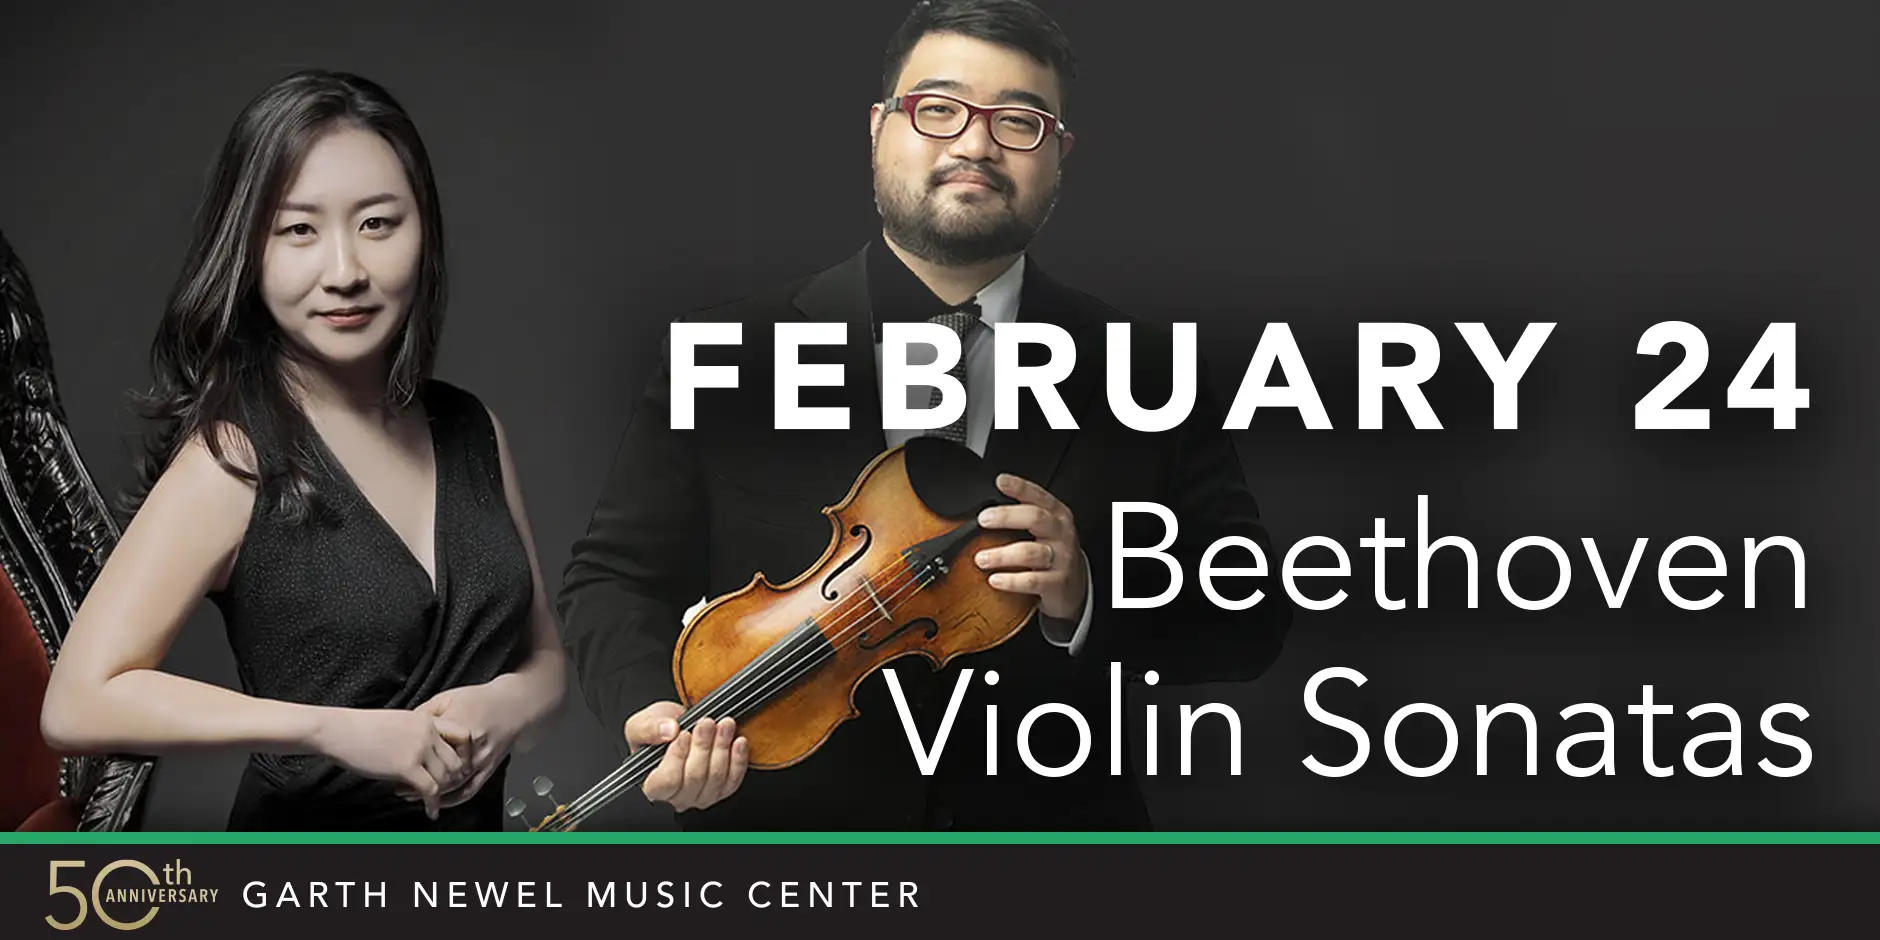 February 24 - Beethoven Violin Sonatas